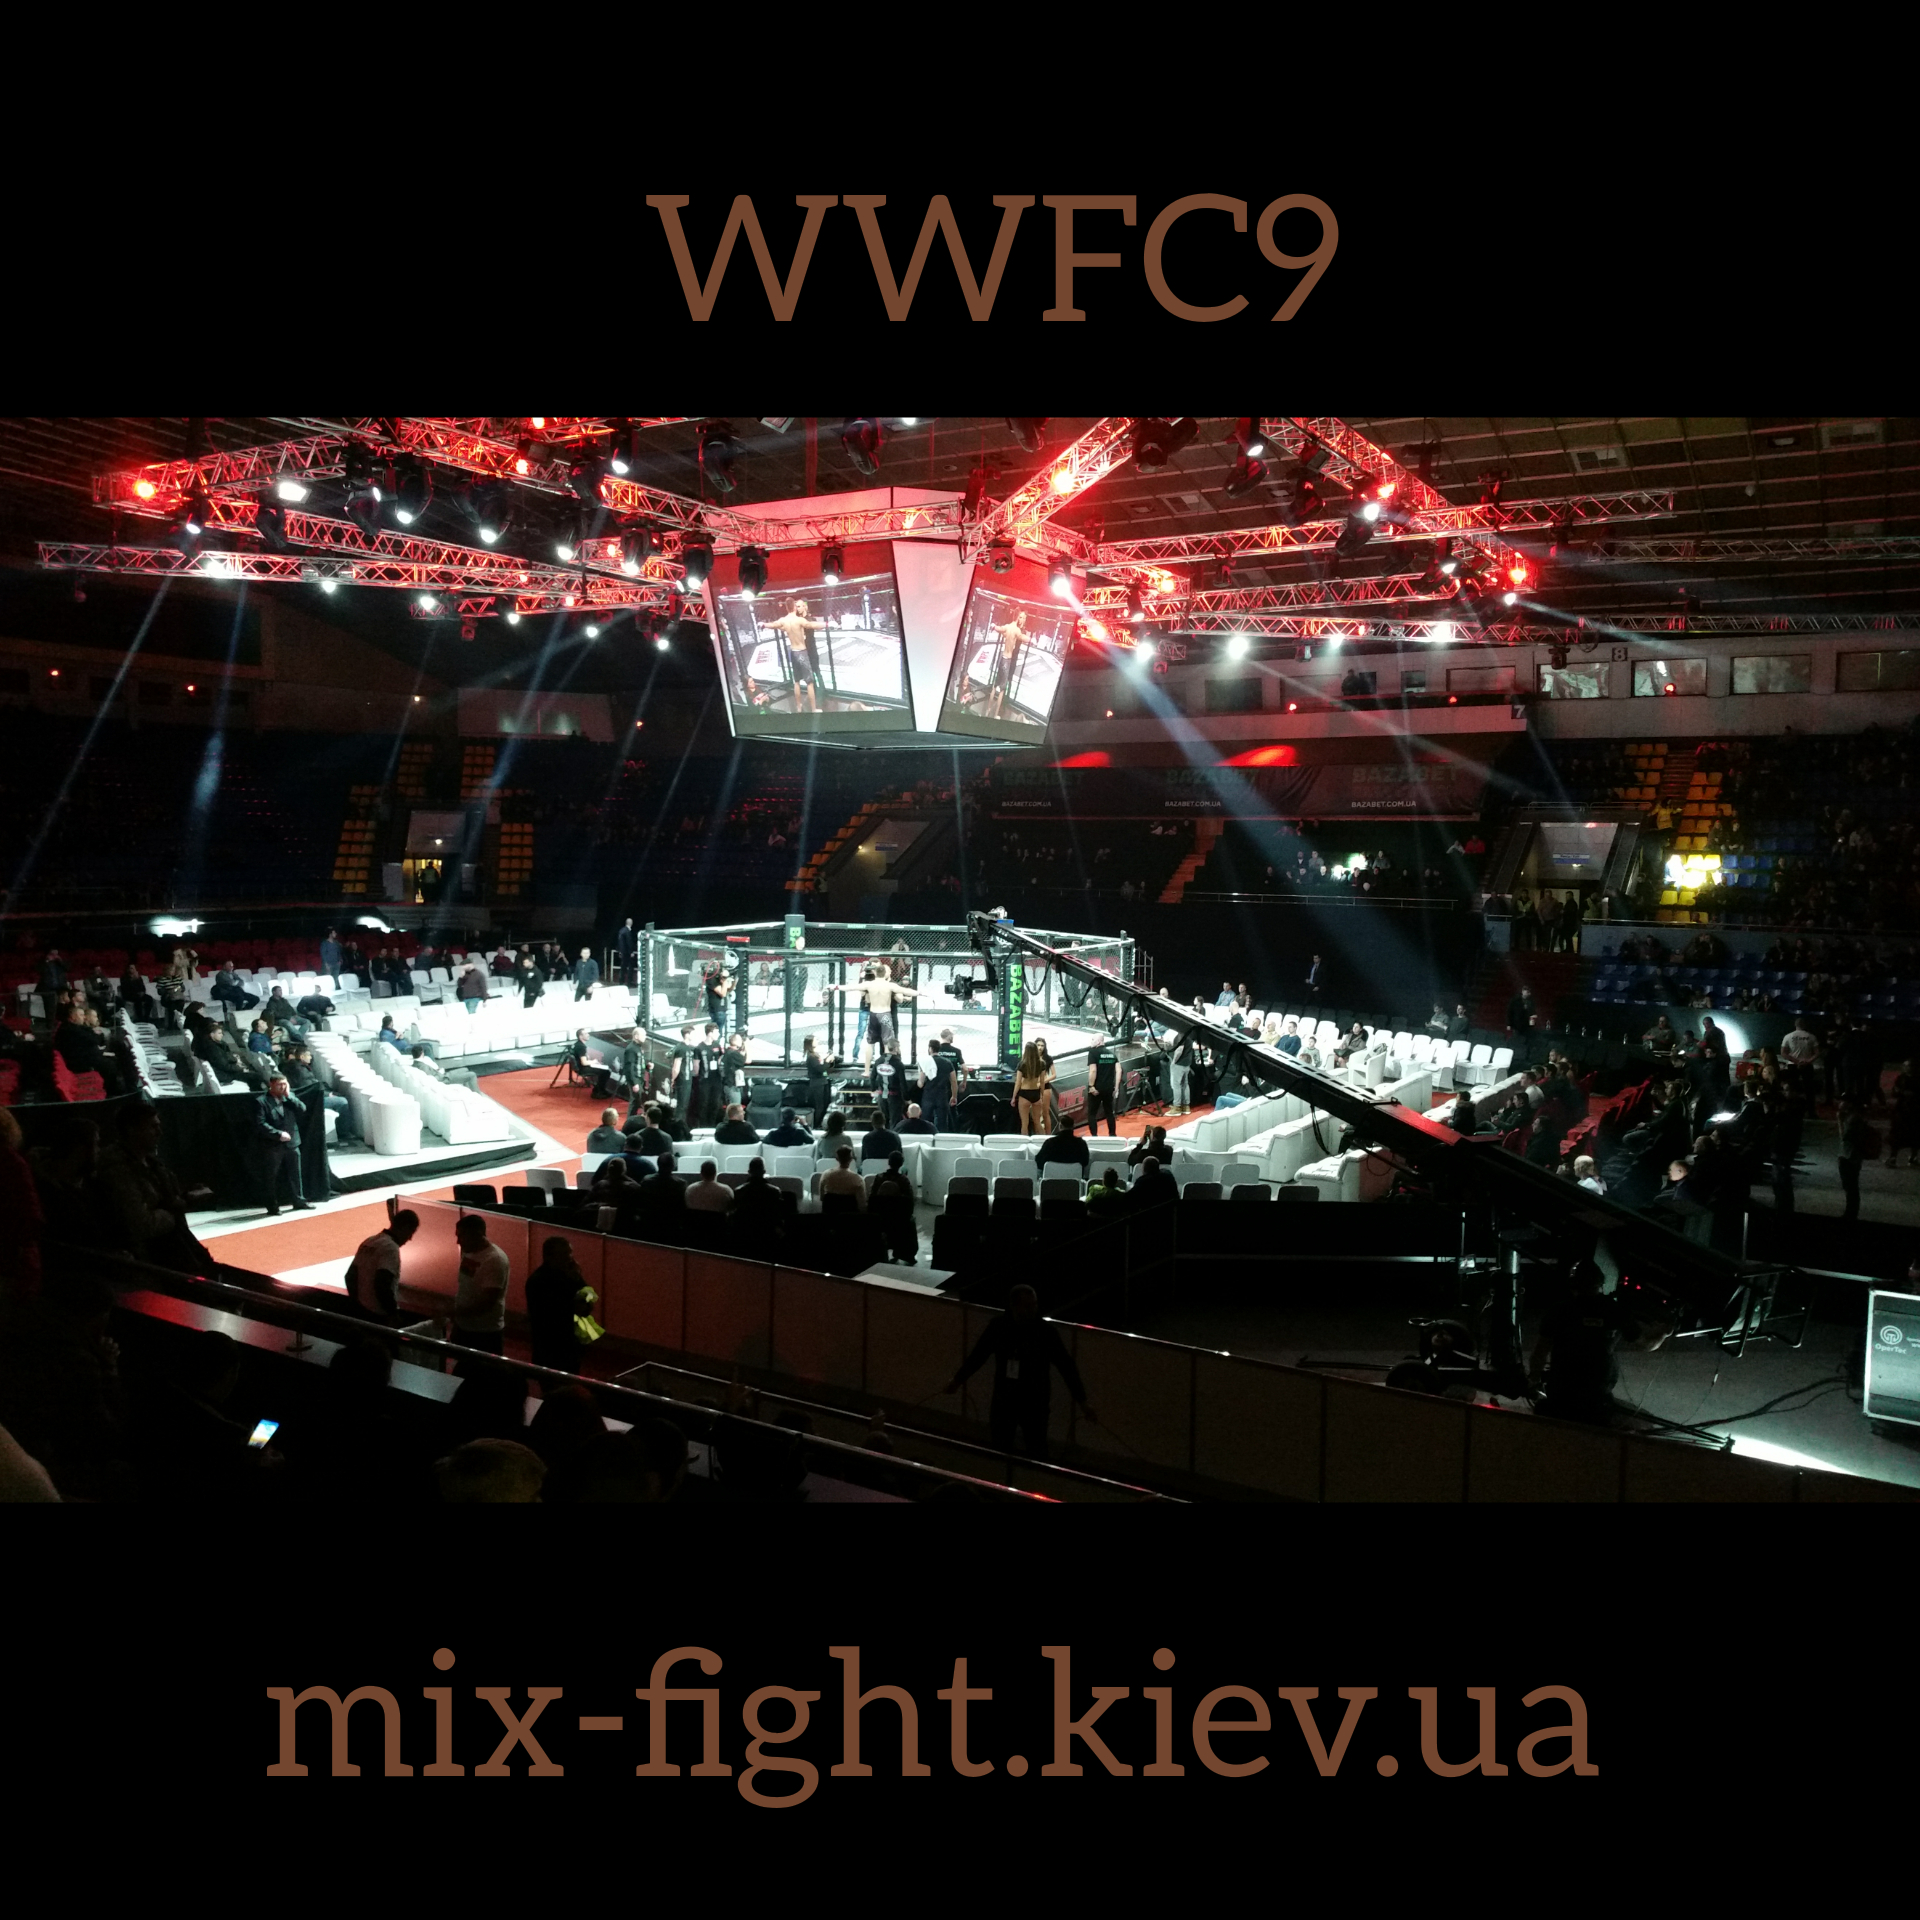 ММА Киев 145 mix-fight.kiev.ua.jpg